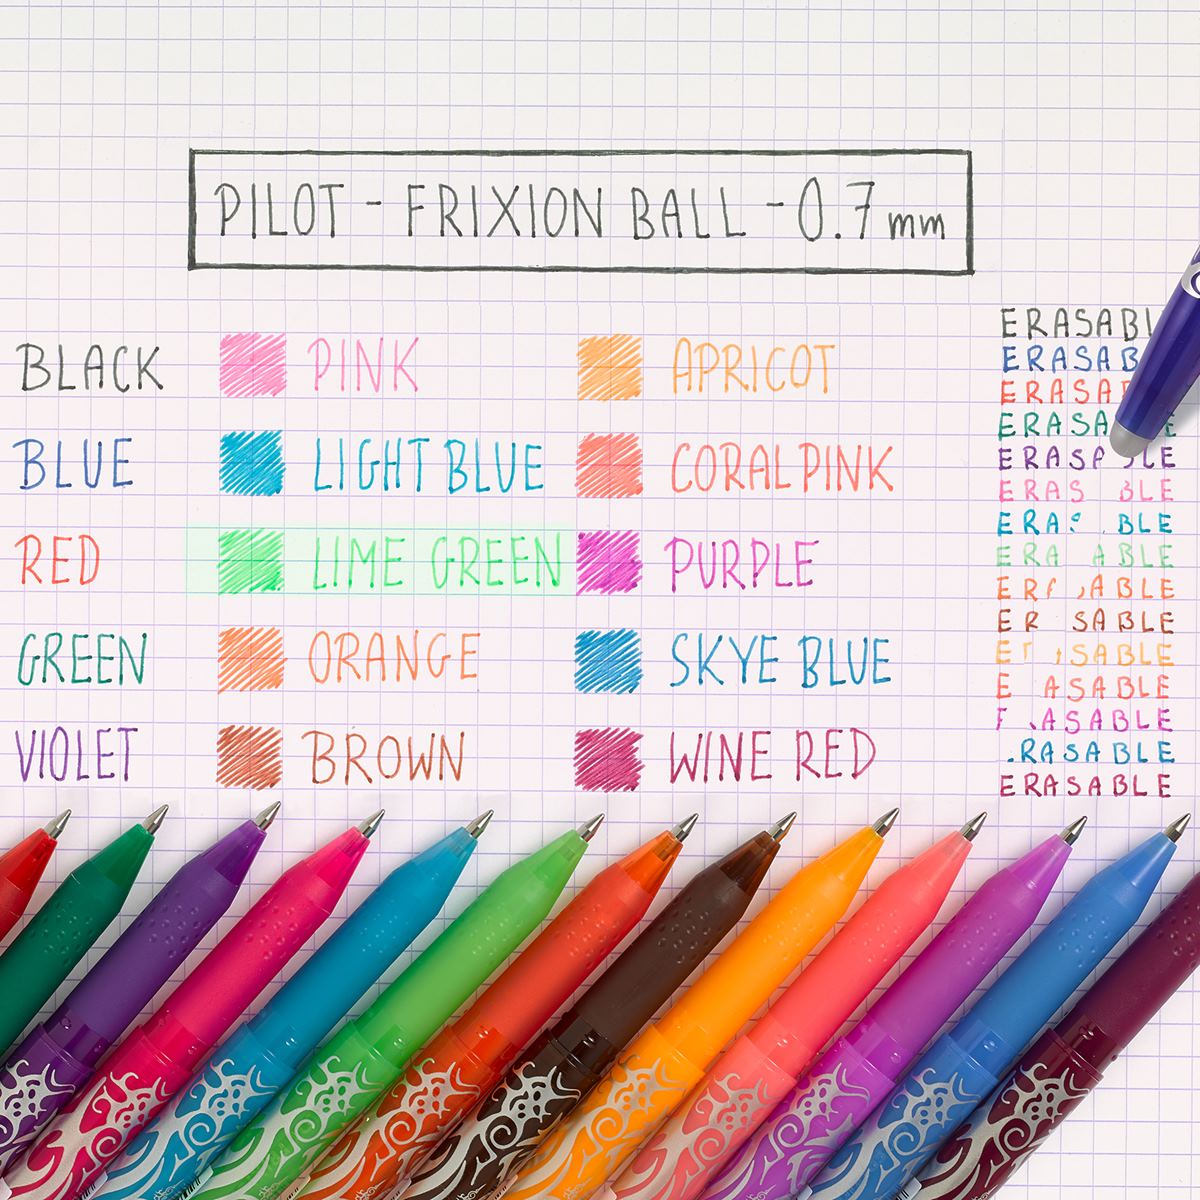 Pilot FriXion Ball Erasable Rollerball Pen - Apricot Orange